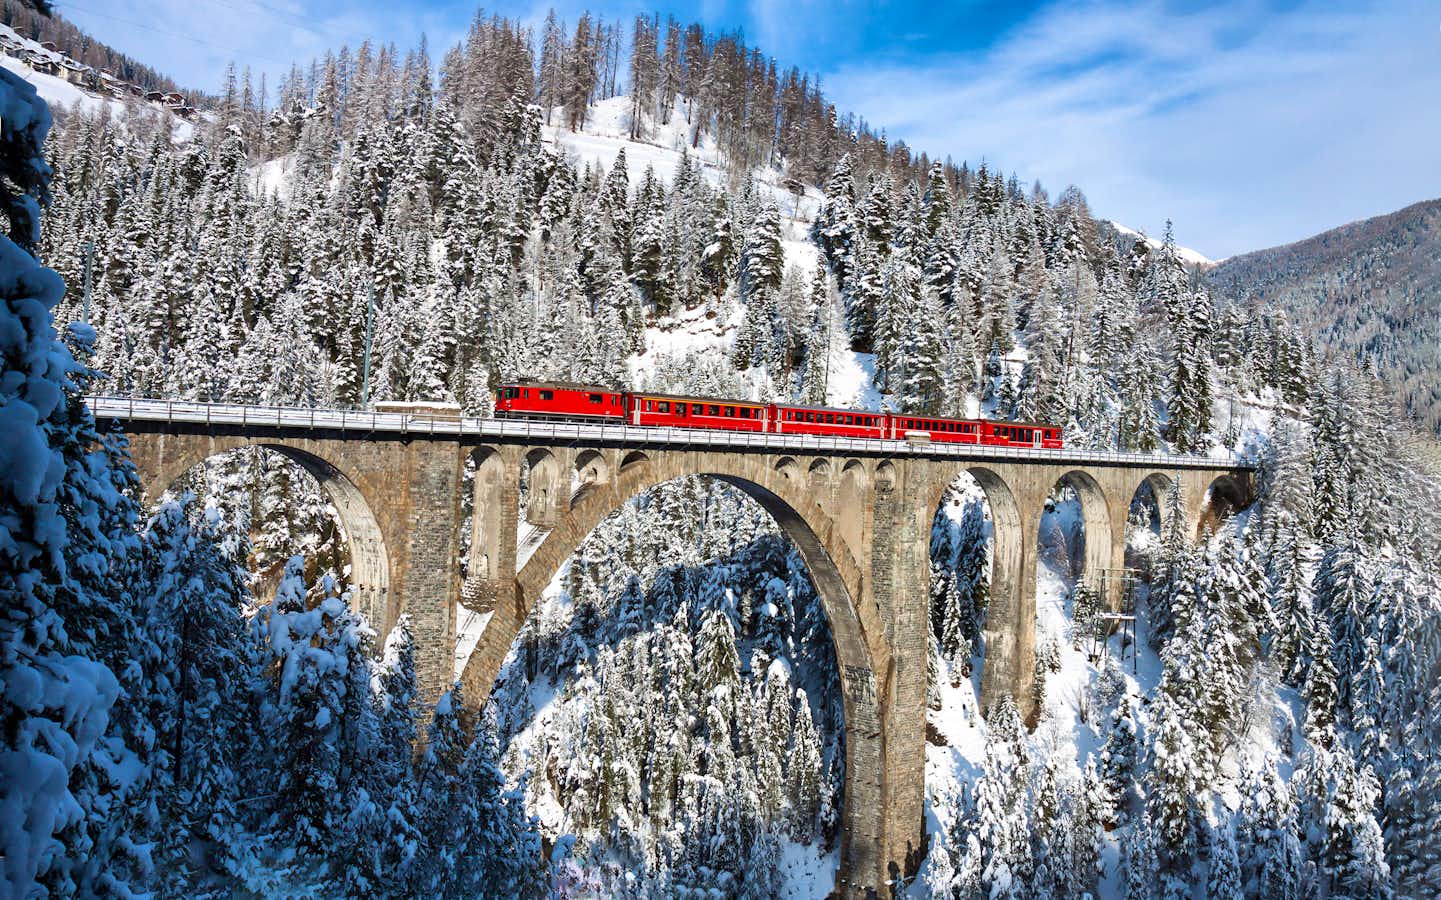 tourhub | Leger Holidays | Four Countries Christmas & the Swiss Glacier Express 